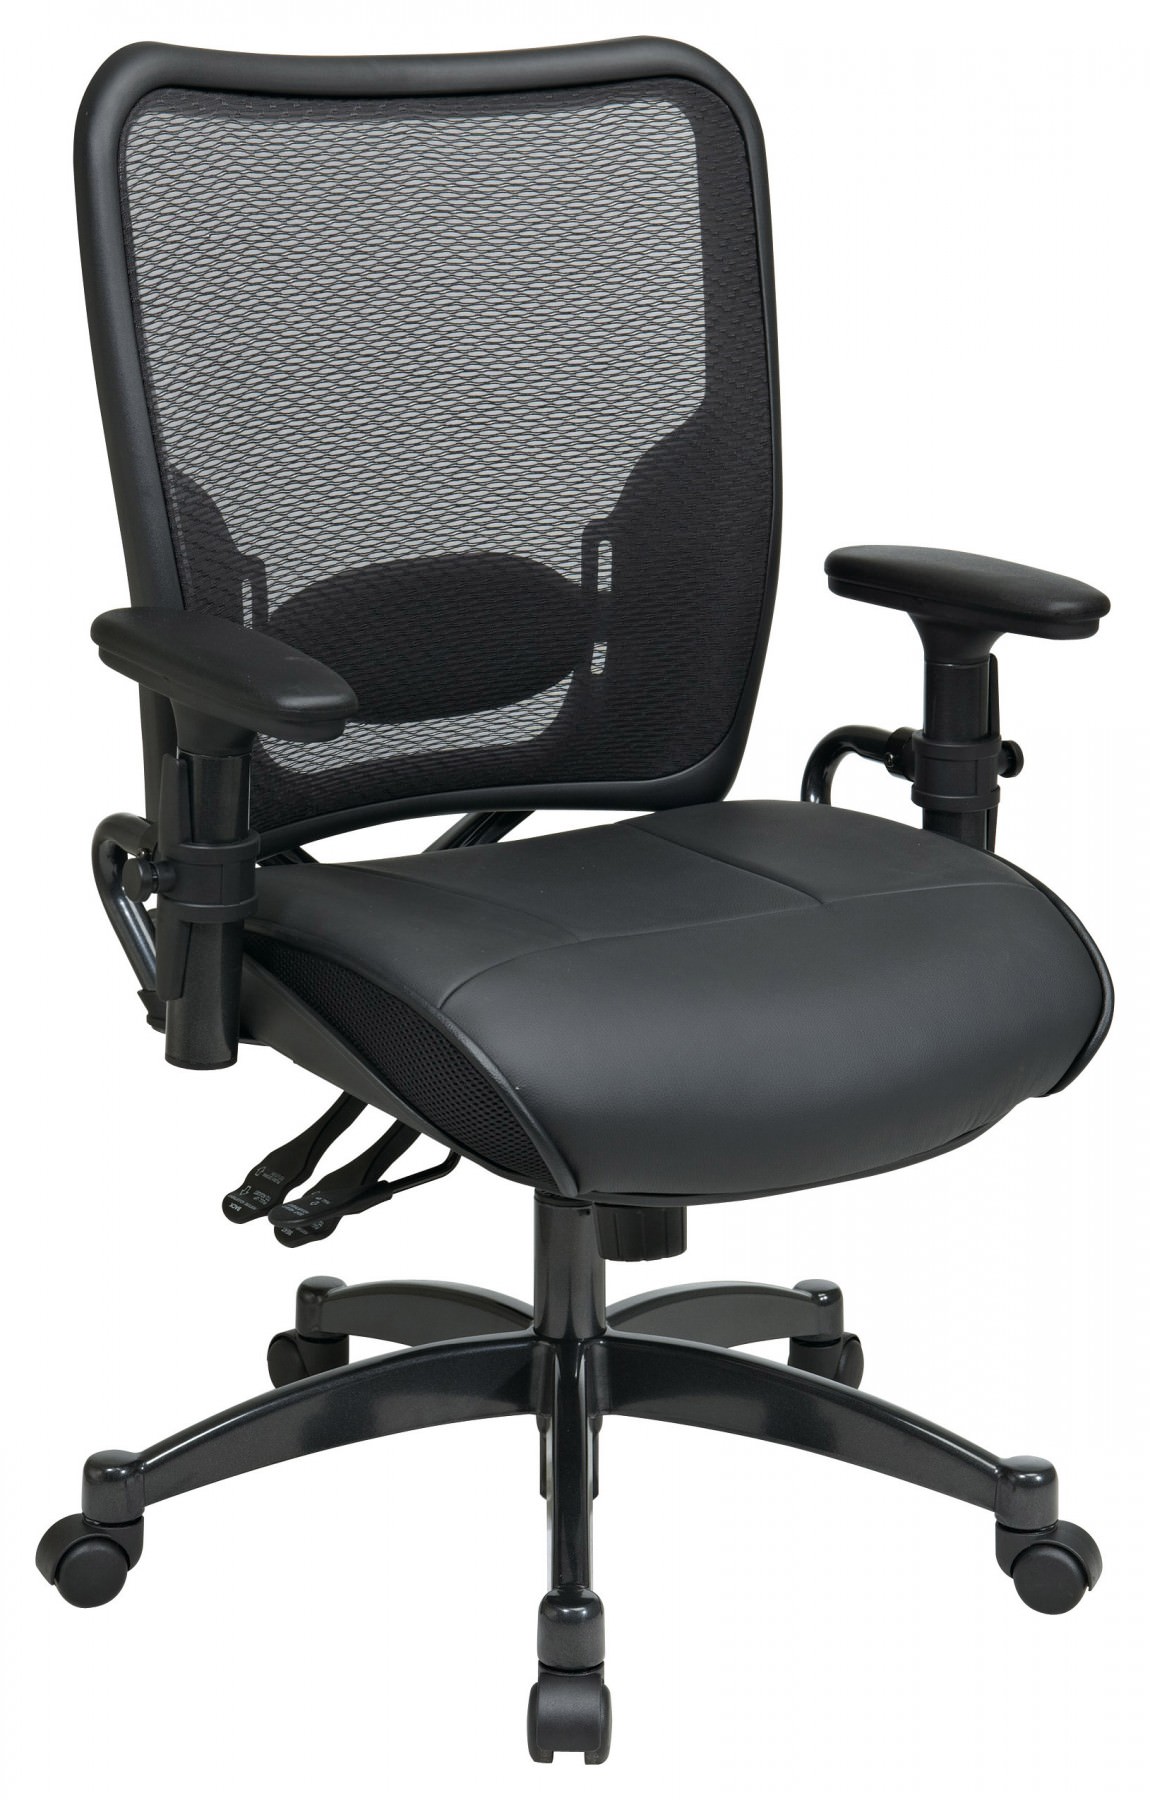 https://madisonliquidators.com/images/p/1150/25463-mesh-back-office-chair-1.jpg